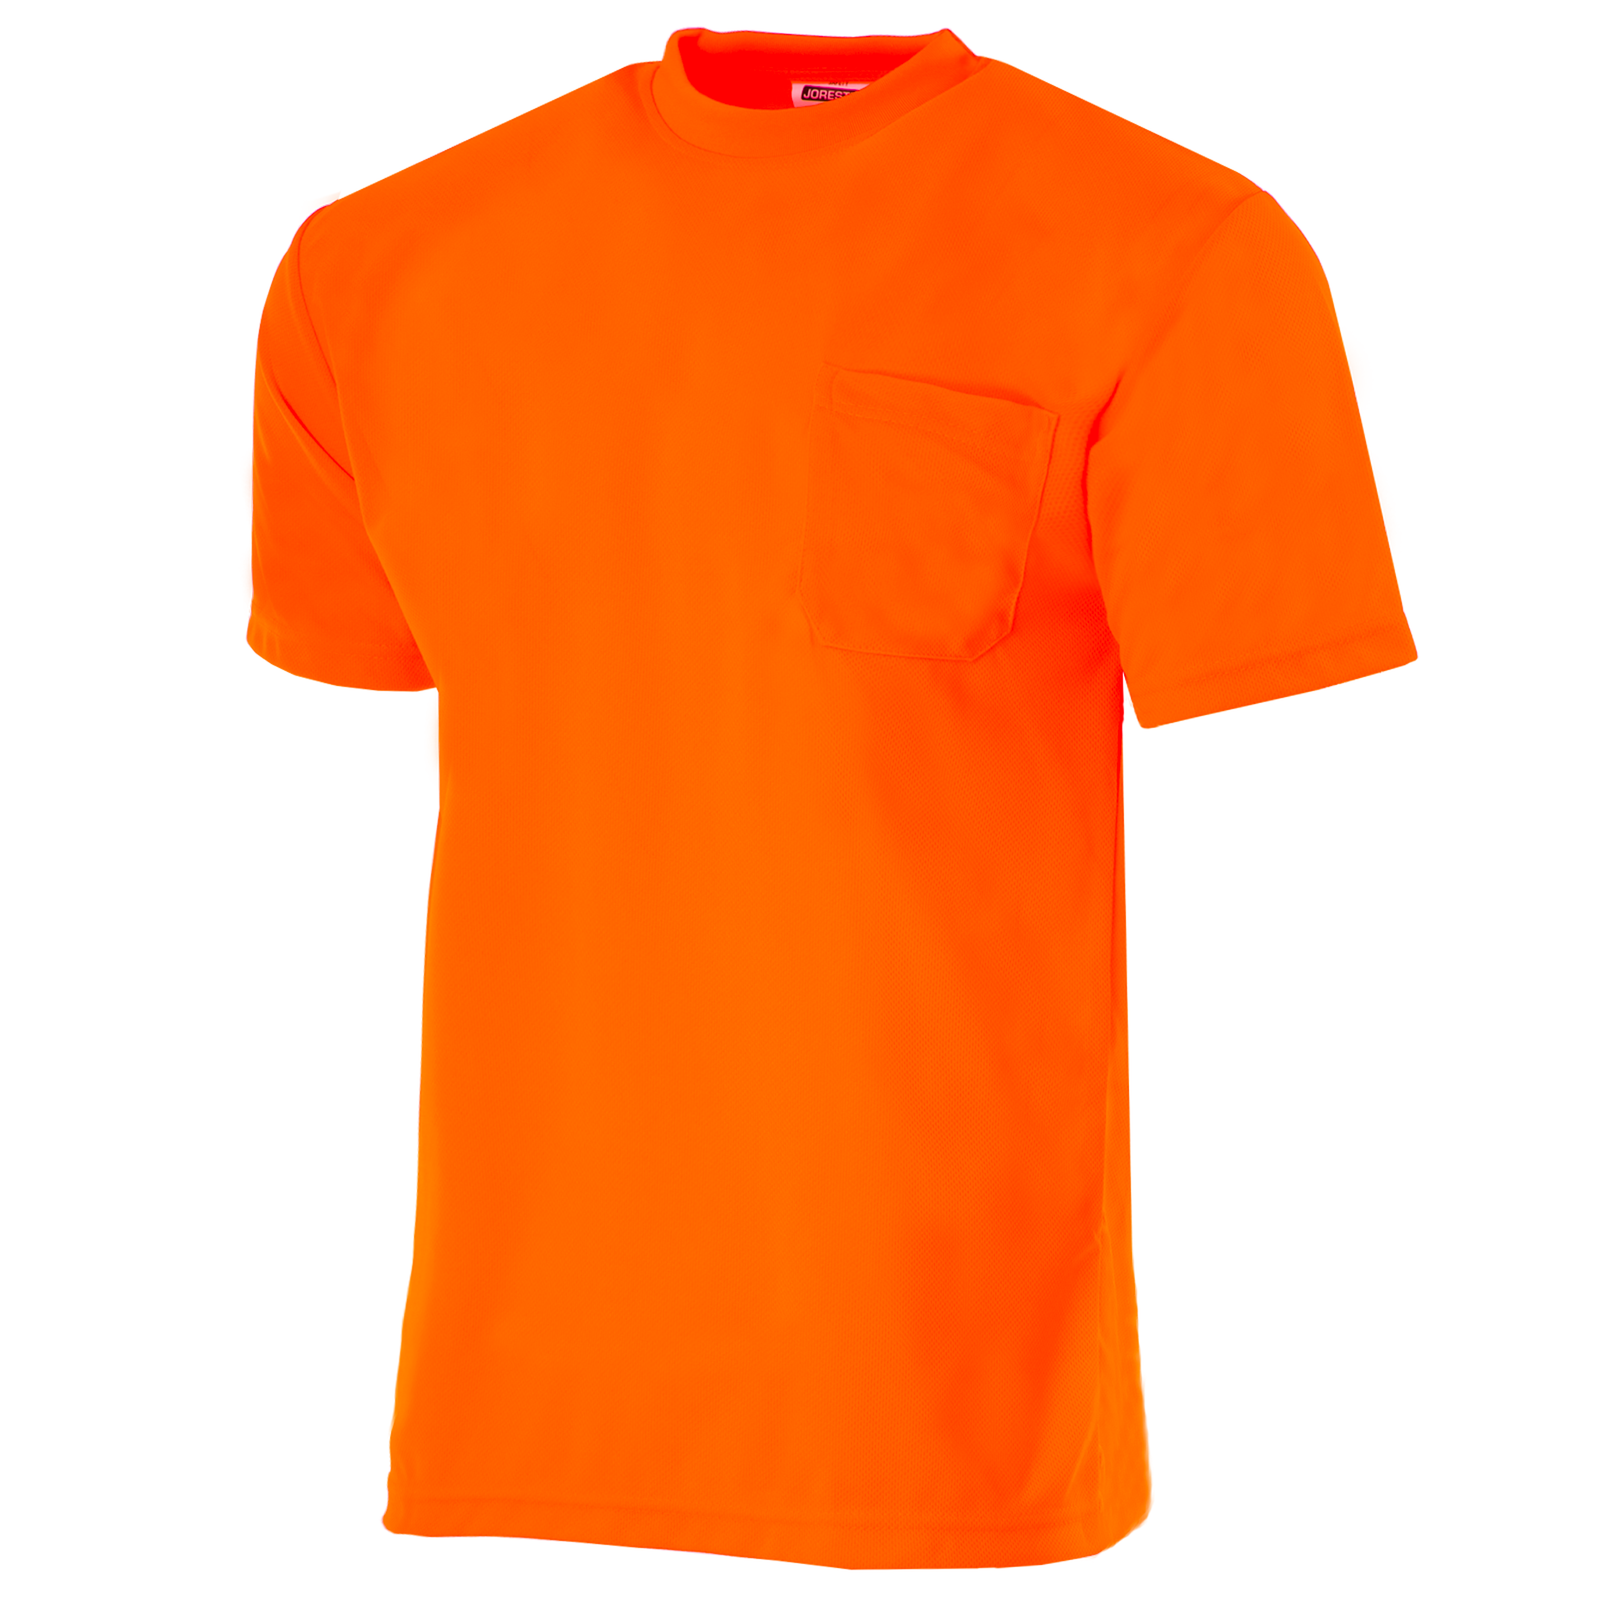 Diagonal view of the Hi-Vis orange short sleeve safety pocket shirt